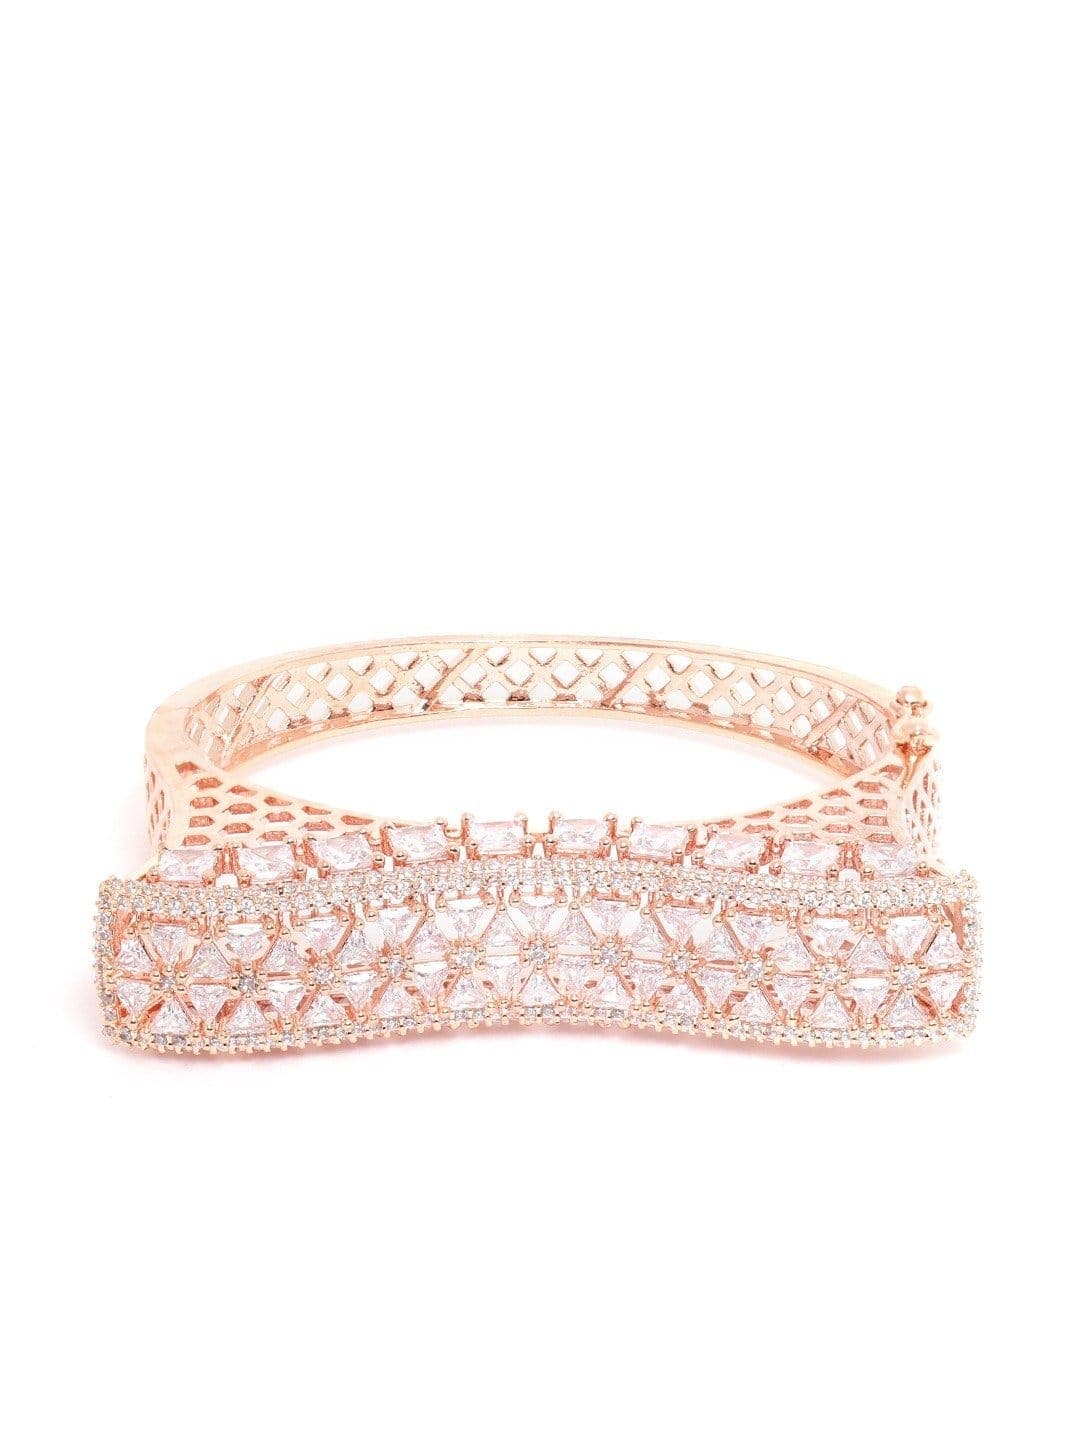 Buy American Diamond Rose Gold Cuff Bracelet onlineKARAGIRI  FESTIVE SALE   Karagiri